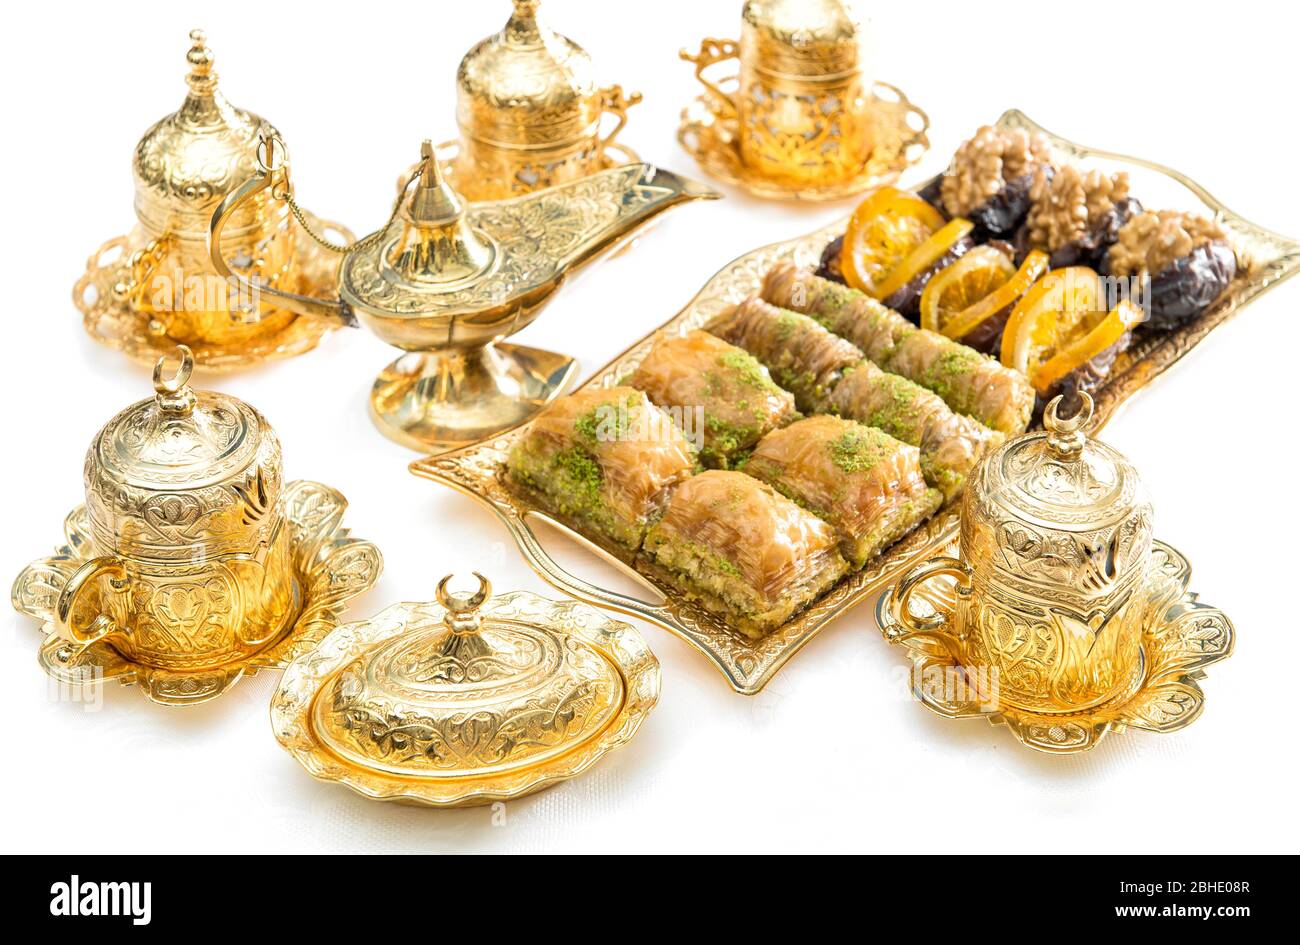 Delizia gastronomica araba, tisane e piatti dorati. Ramadan kareem Foto Stock